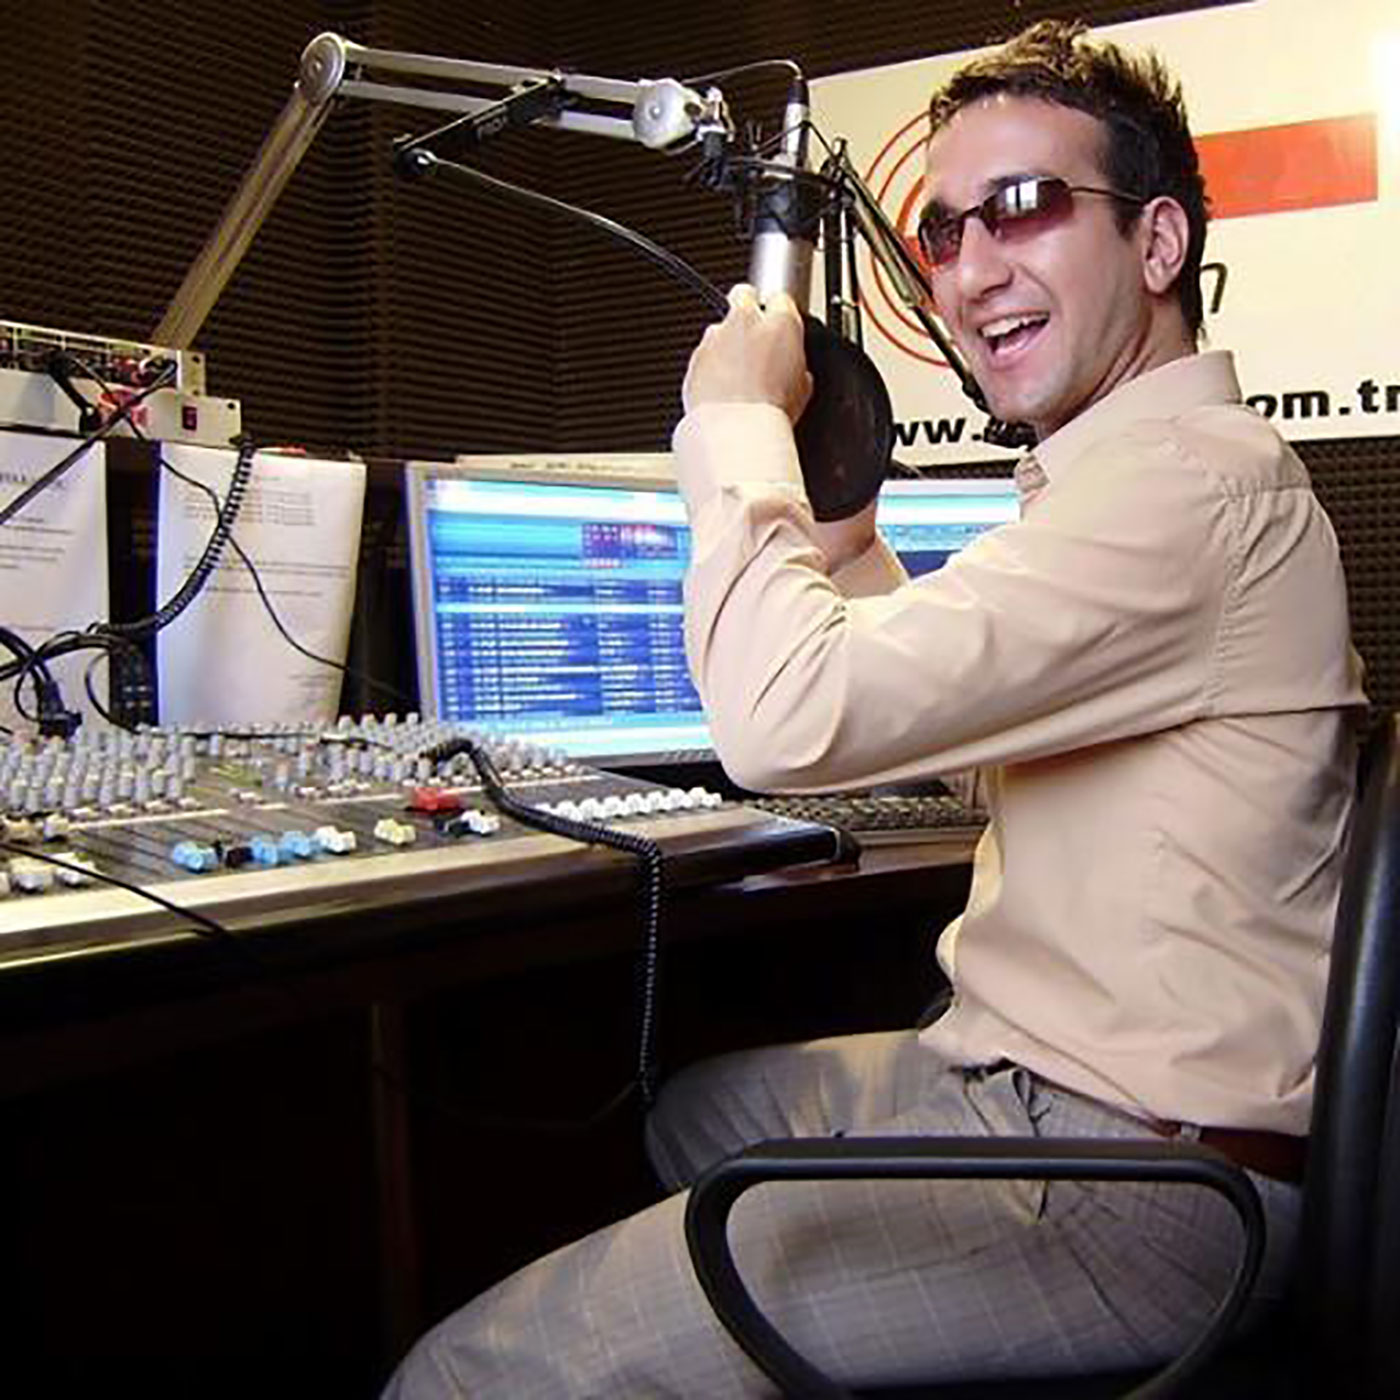 Tuğşah Bilge – 2007 Meltem Radyo Programı